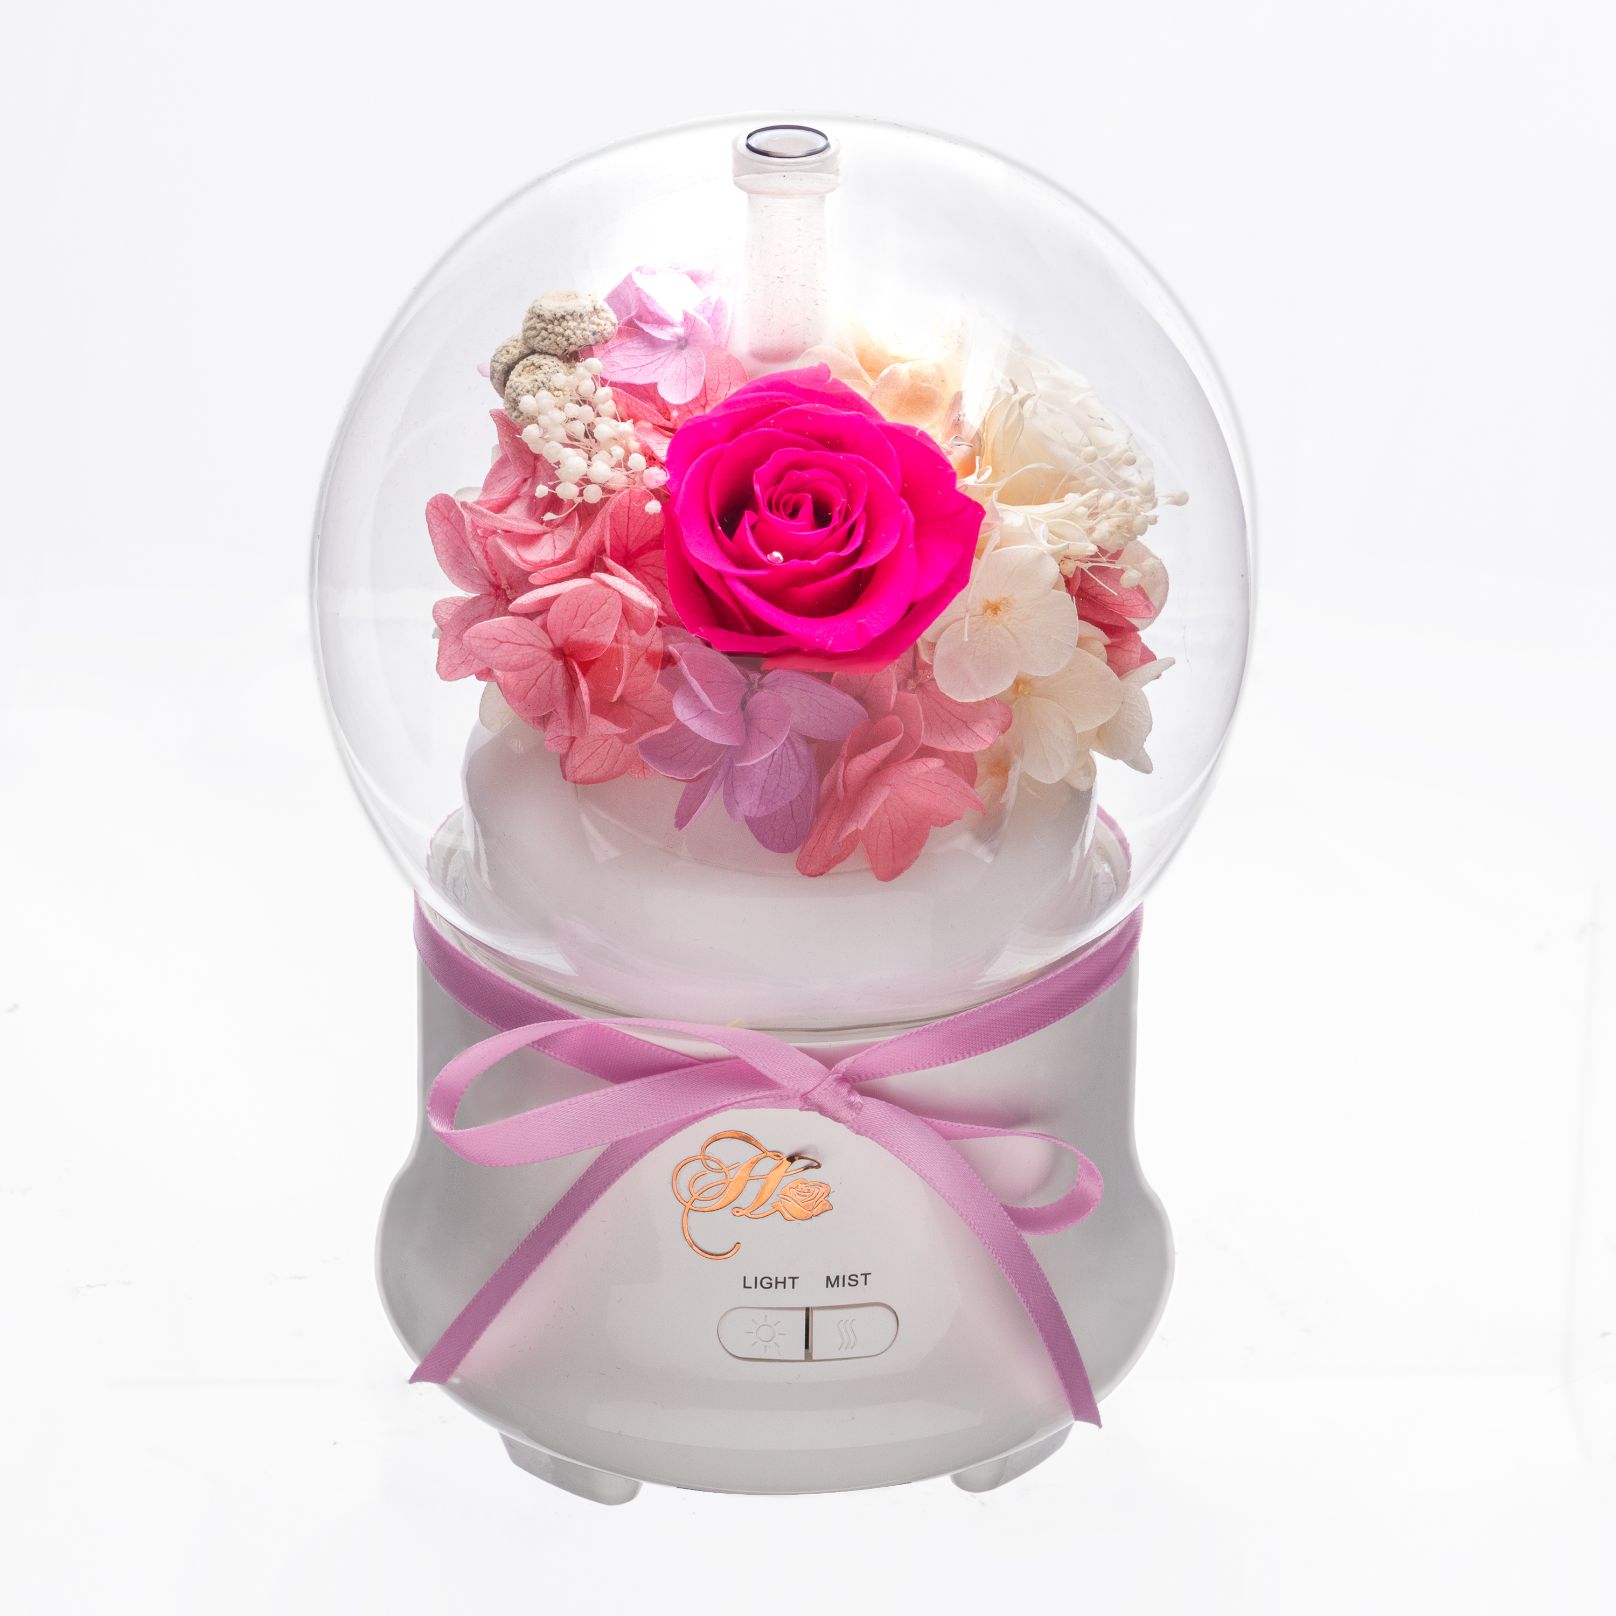 Her Rose Rose Humidifier (Fushia Pink + White)